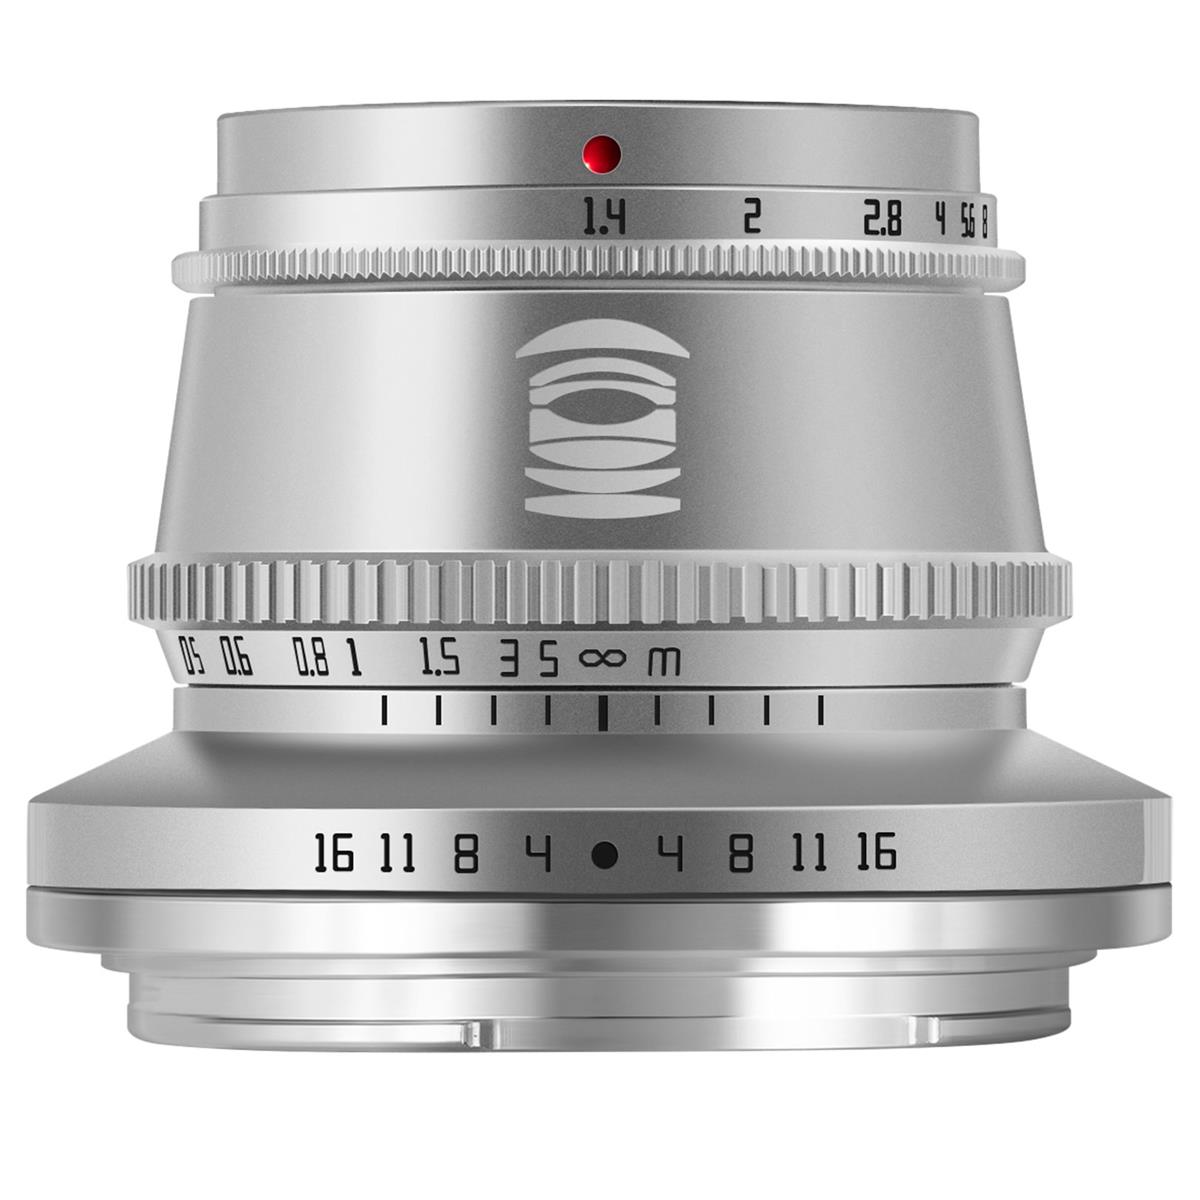 

TTArtisan 35mm f/1.4 Lens for Olympus/Panasonic Micro Four Thirds, Silver